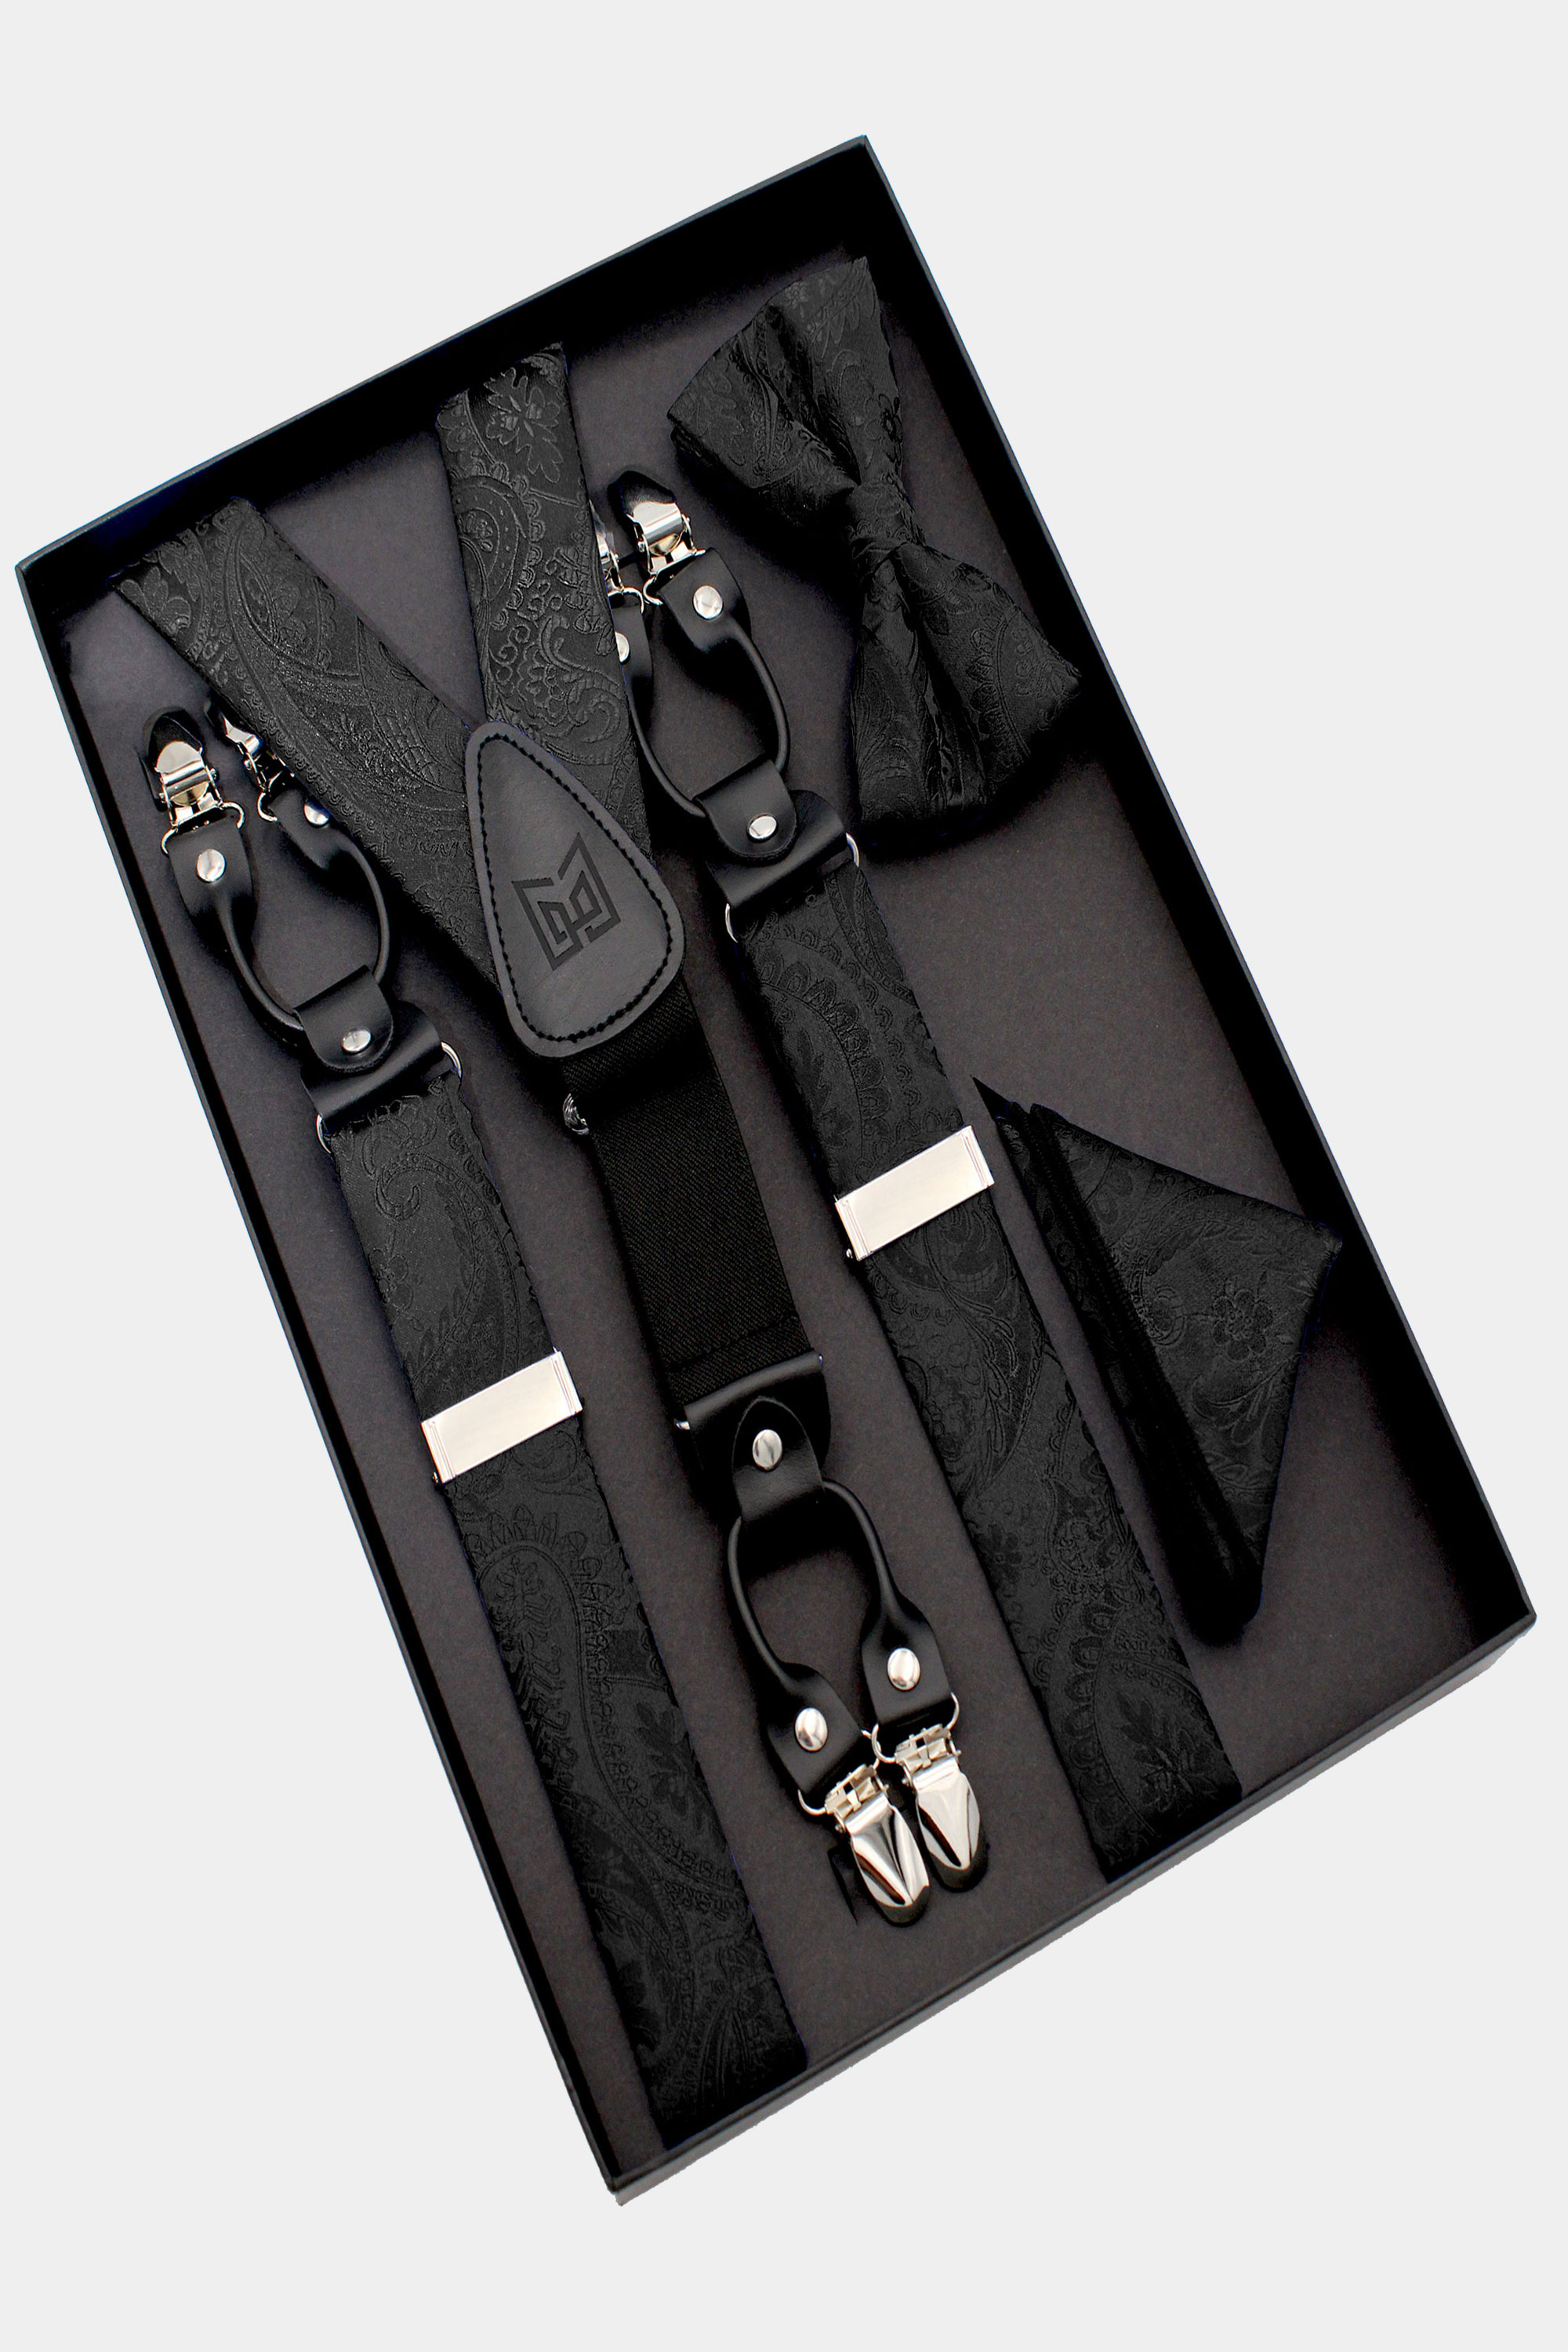 Black-Bow-Tie-and-Suspenders-Wedding-Groomsmen-Prom-from-Gentlemansguru.com